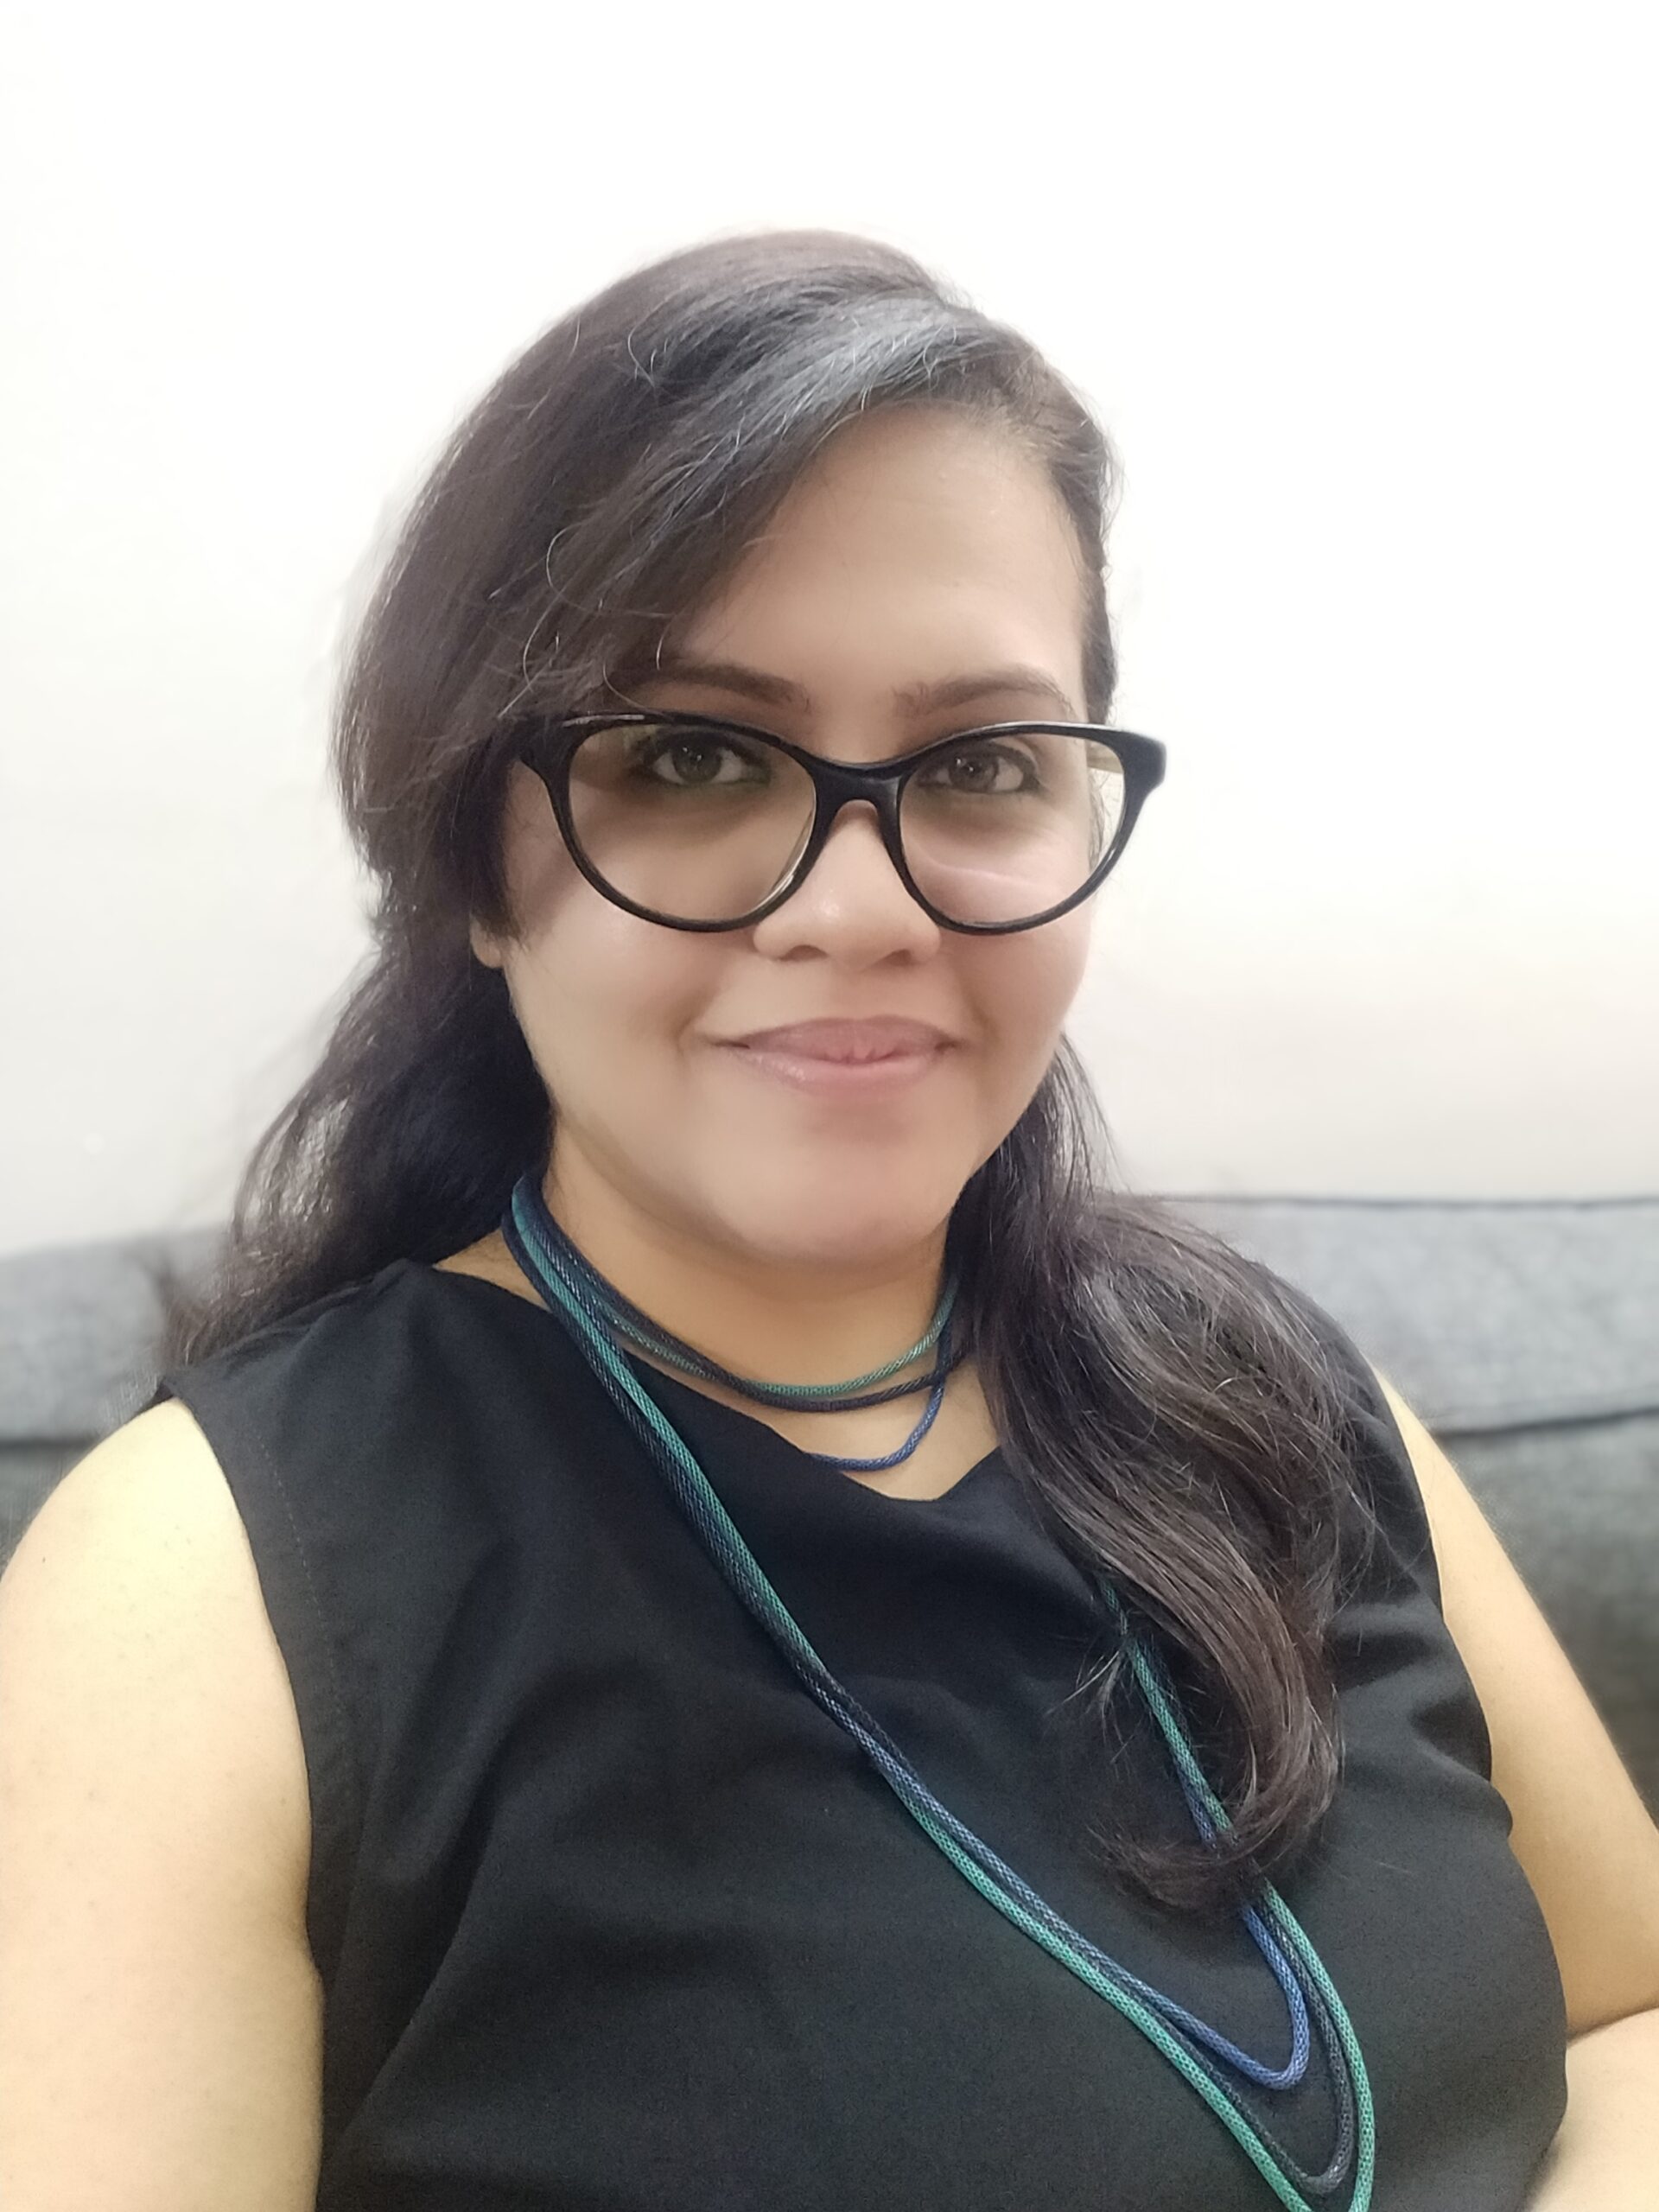 Indian Woman Game Developer Gets Global Acclaim - Zenger News